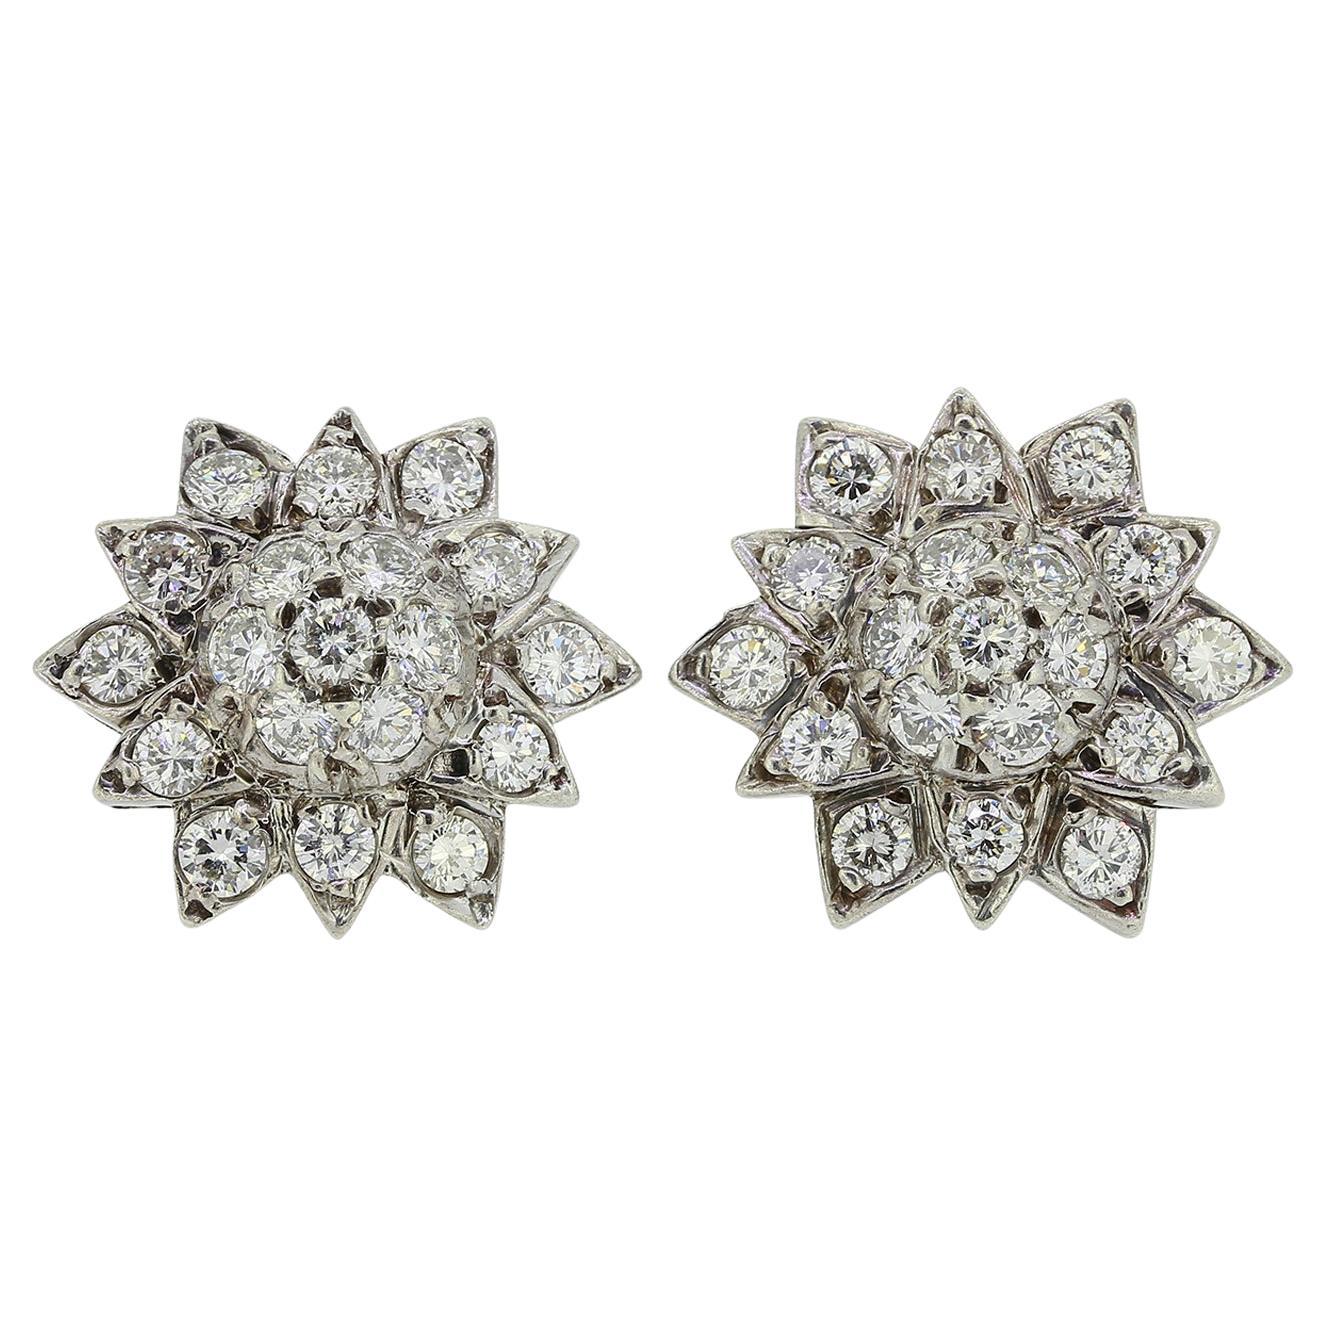 Vintage 1.14 Carat Diamond Cluster Earrings For Sale